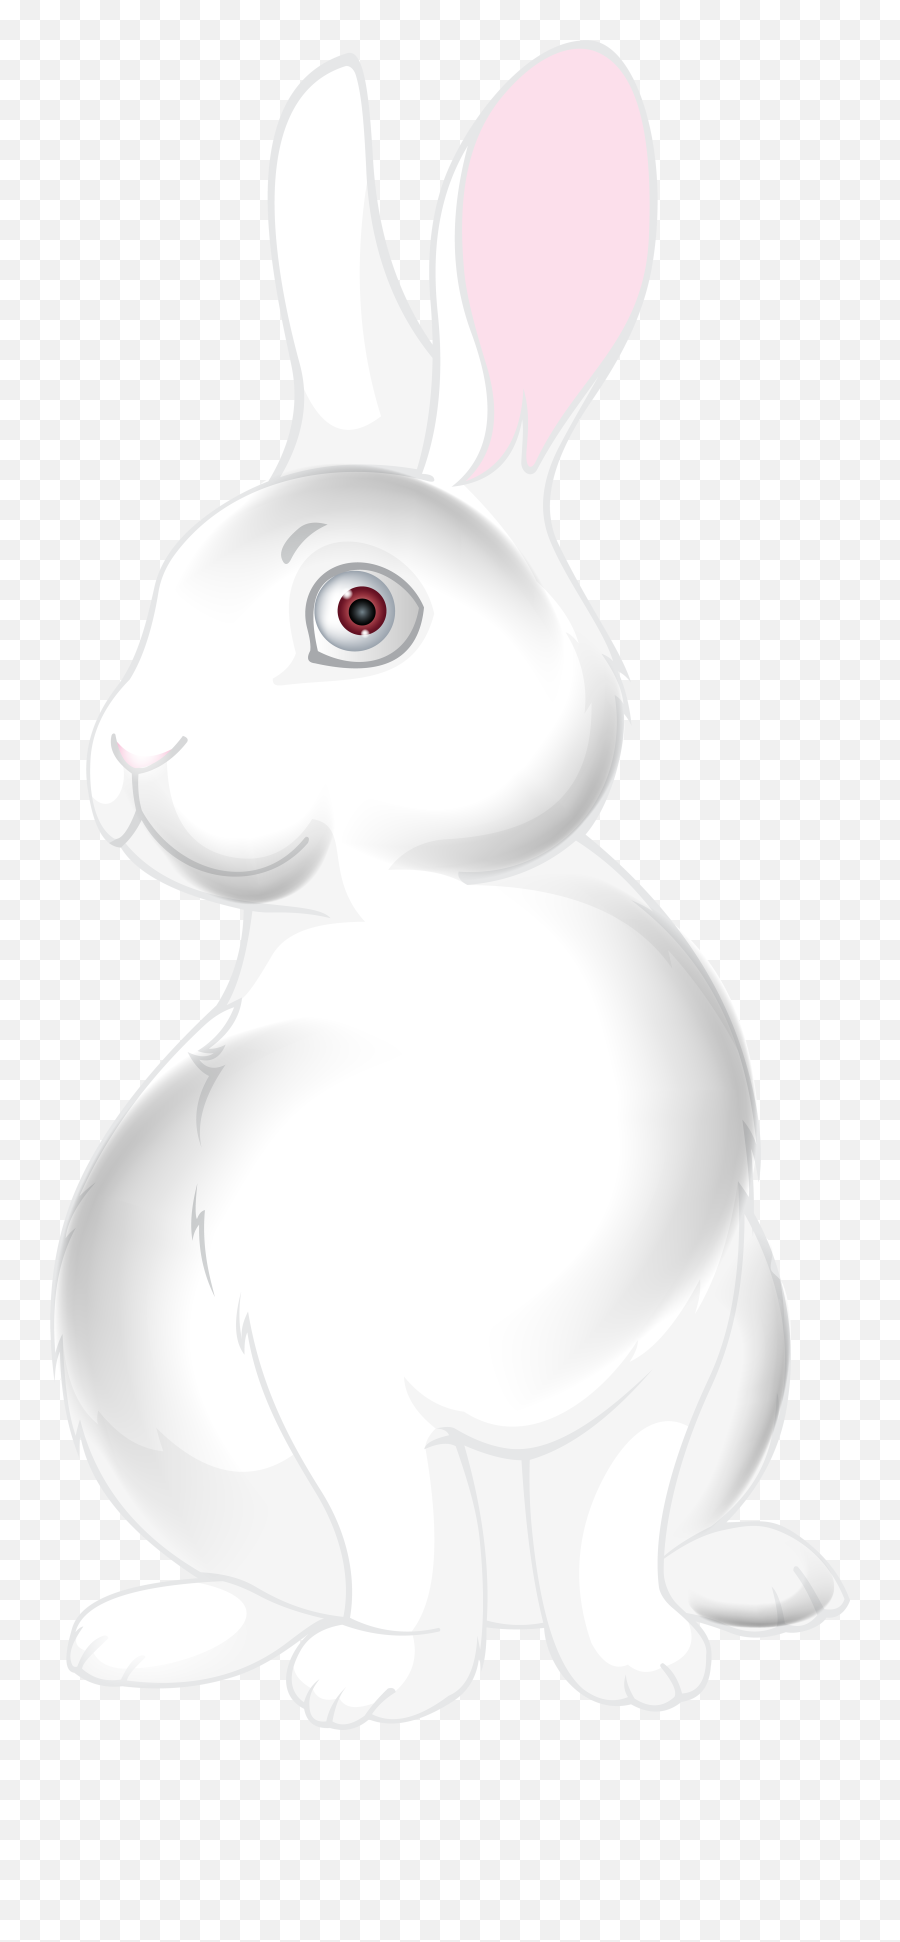 White Bunny Cartoon Png Clip Art Image - Cartoon,White Bunny Png